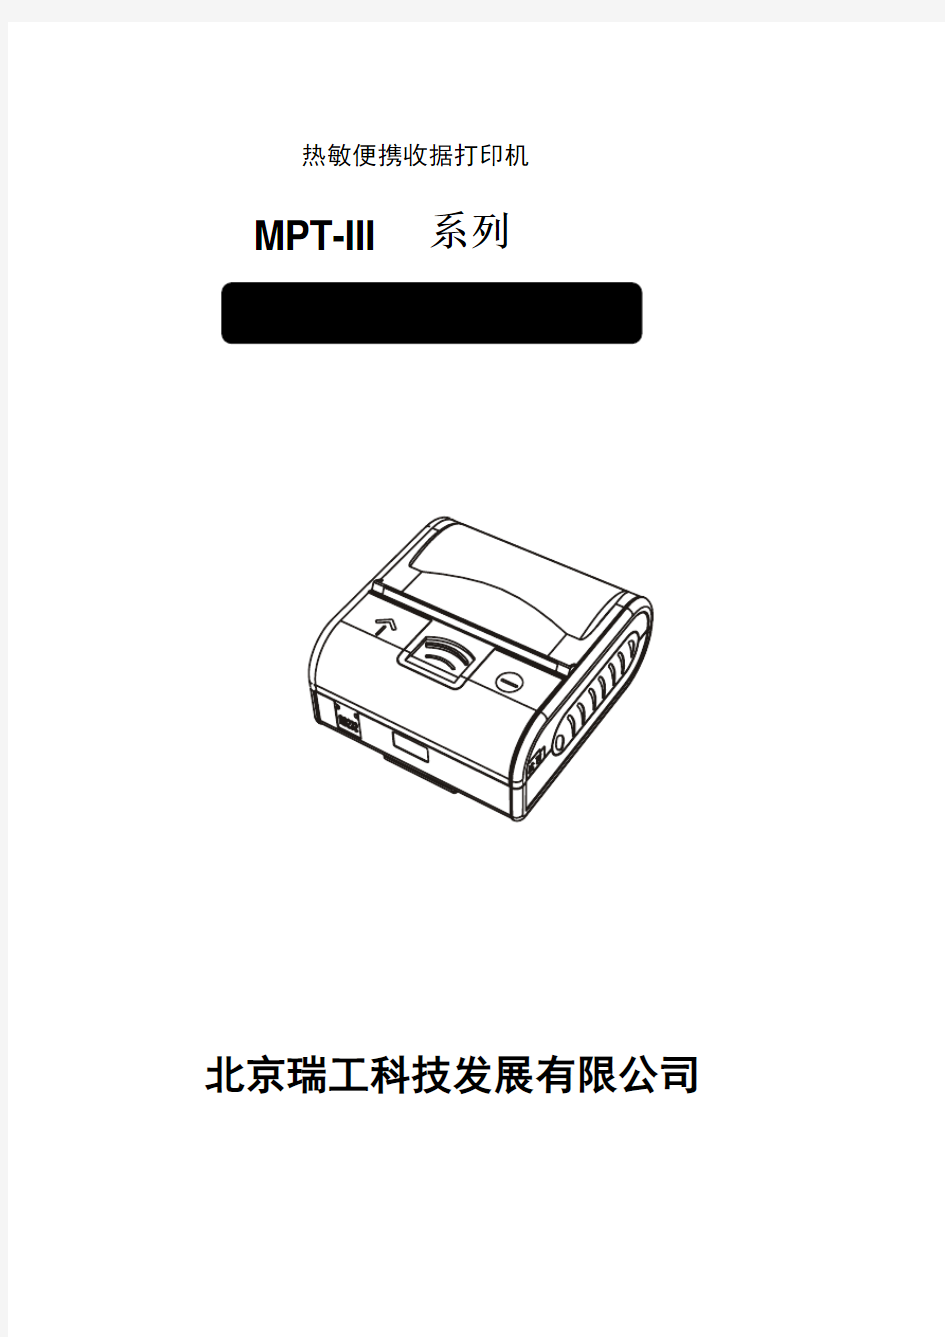 MPT-III热敏便携打印机说明书